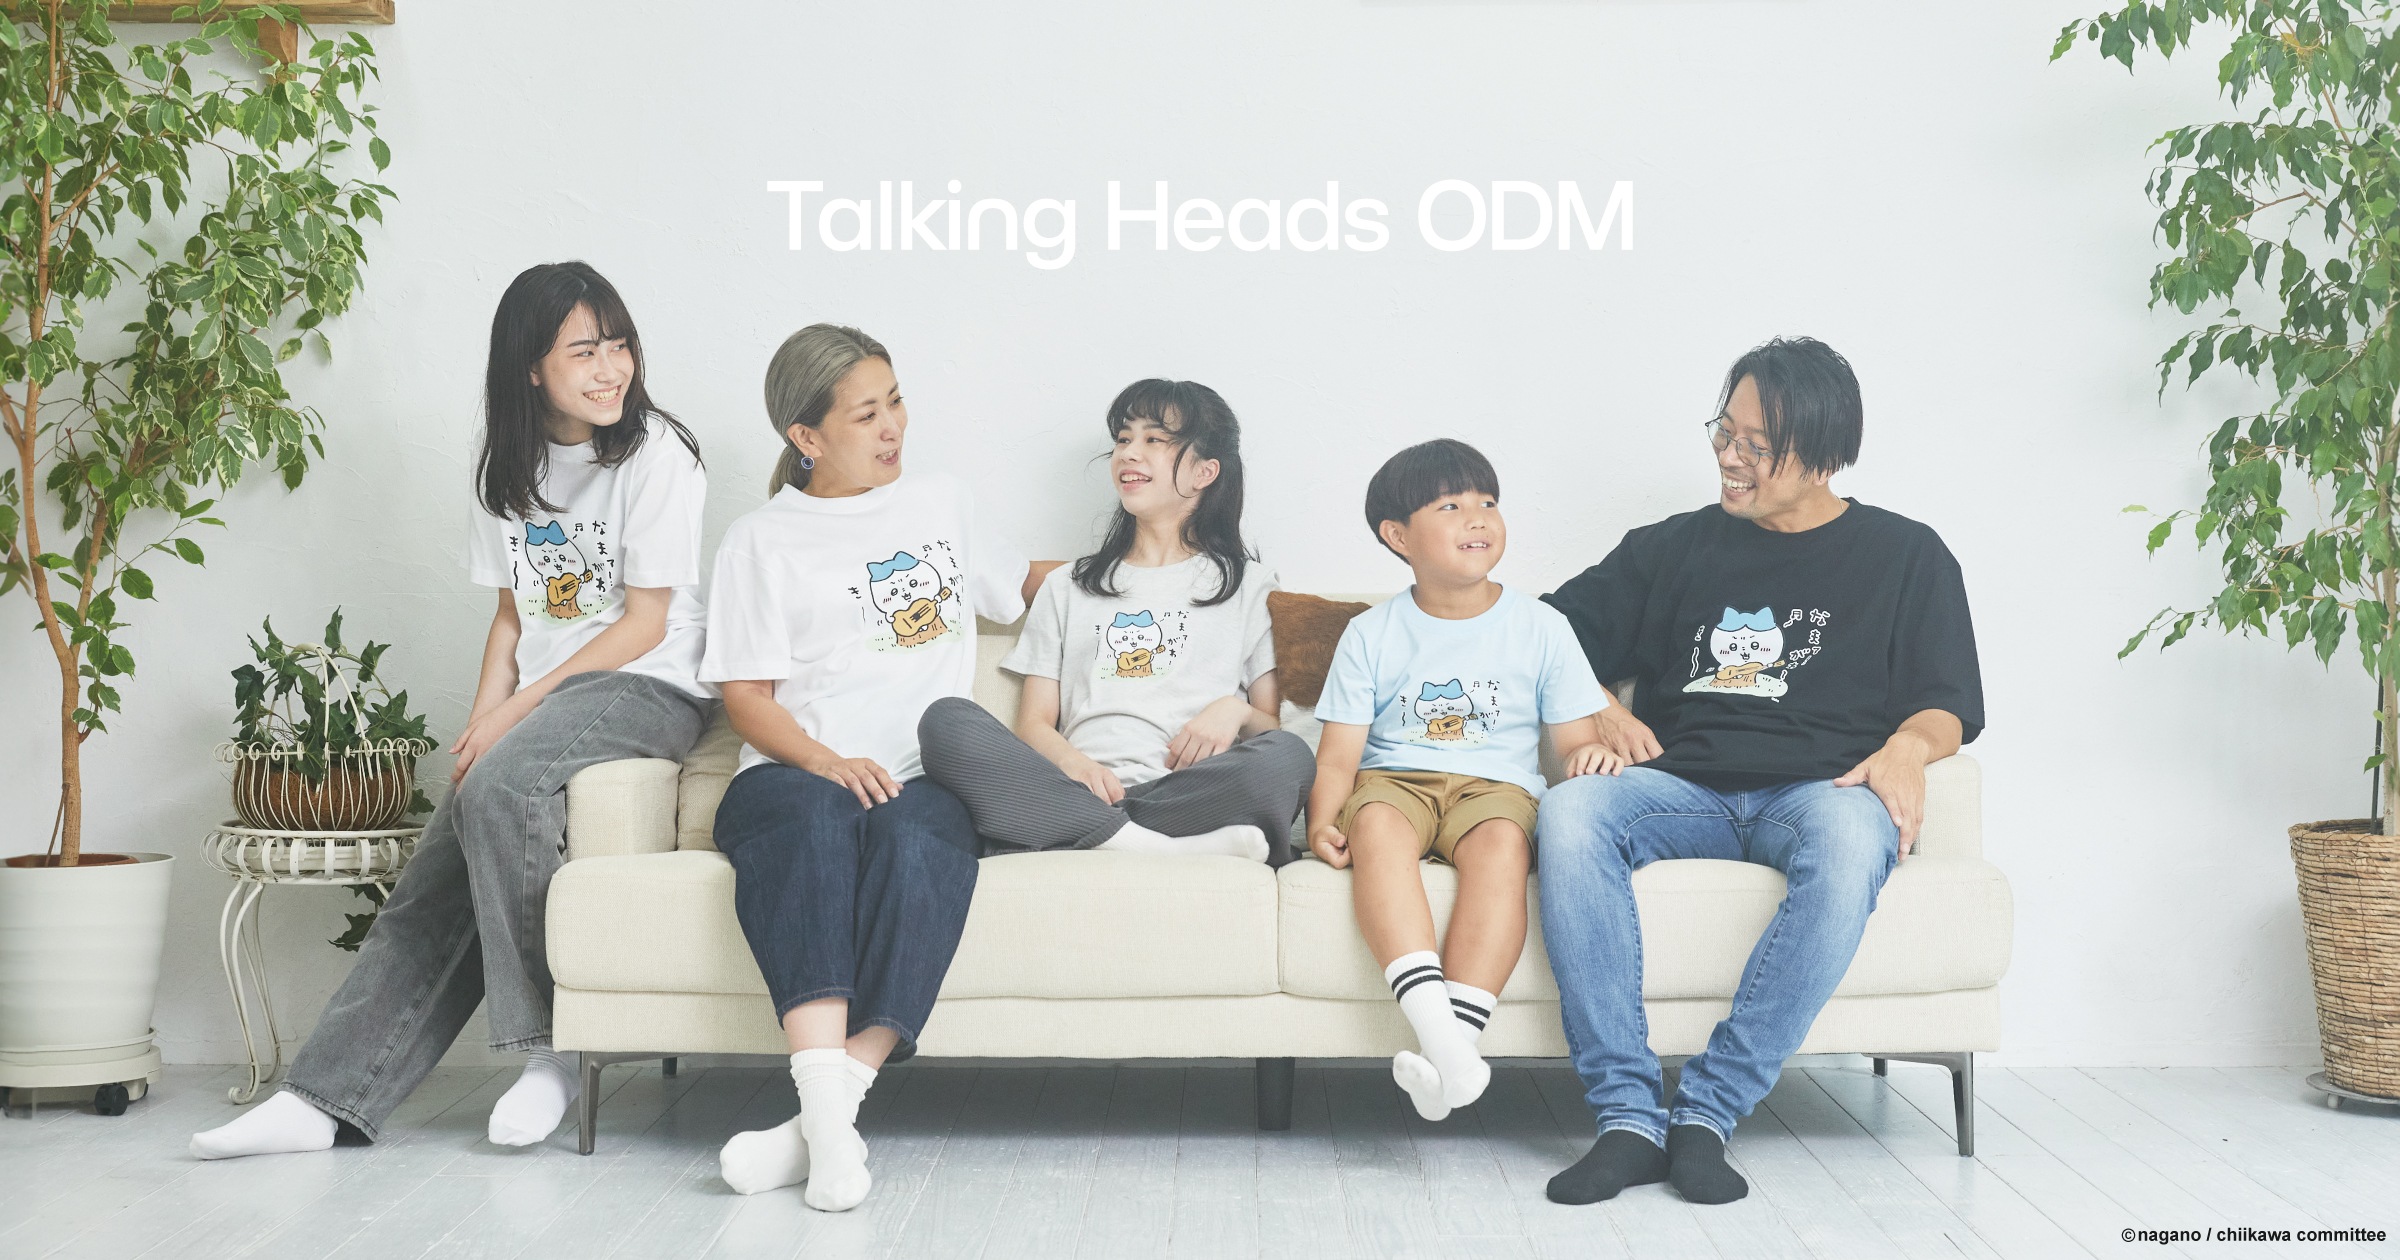 Talking Heads ODMバナー PC